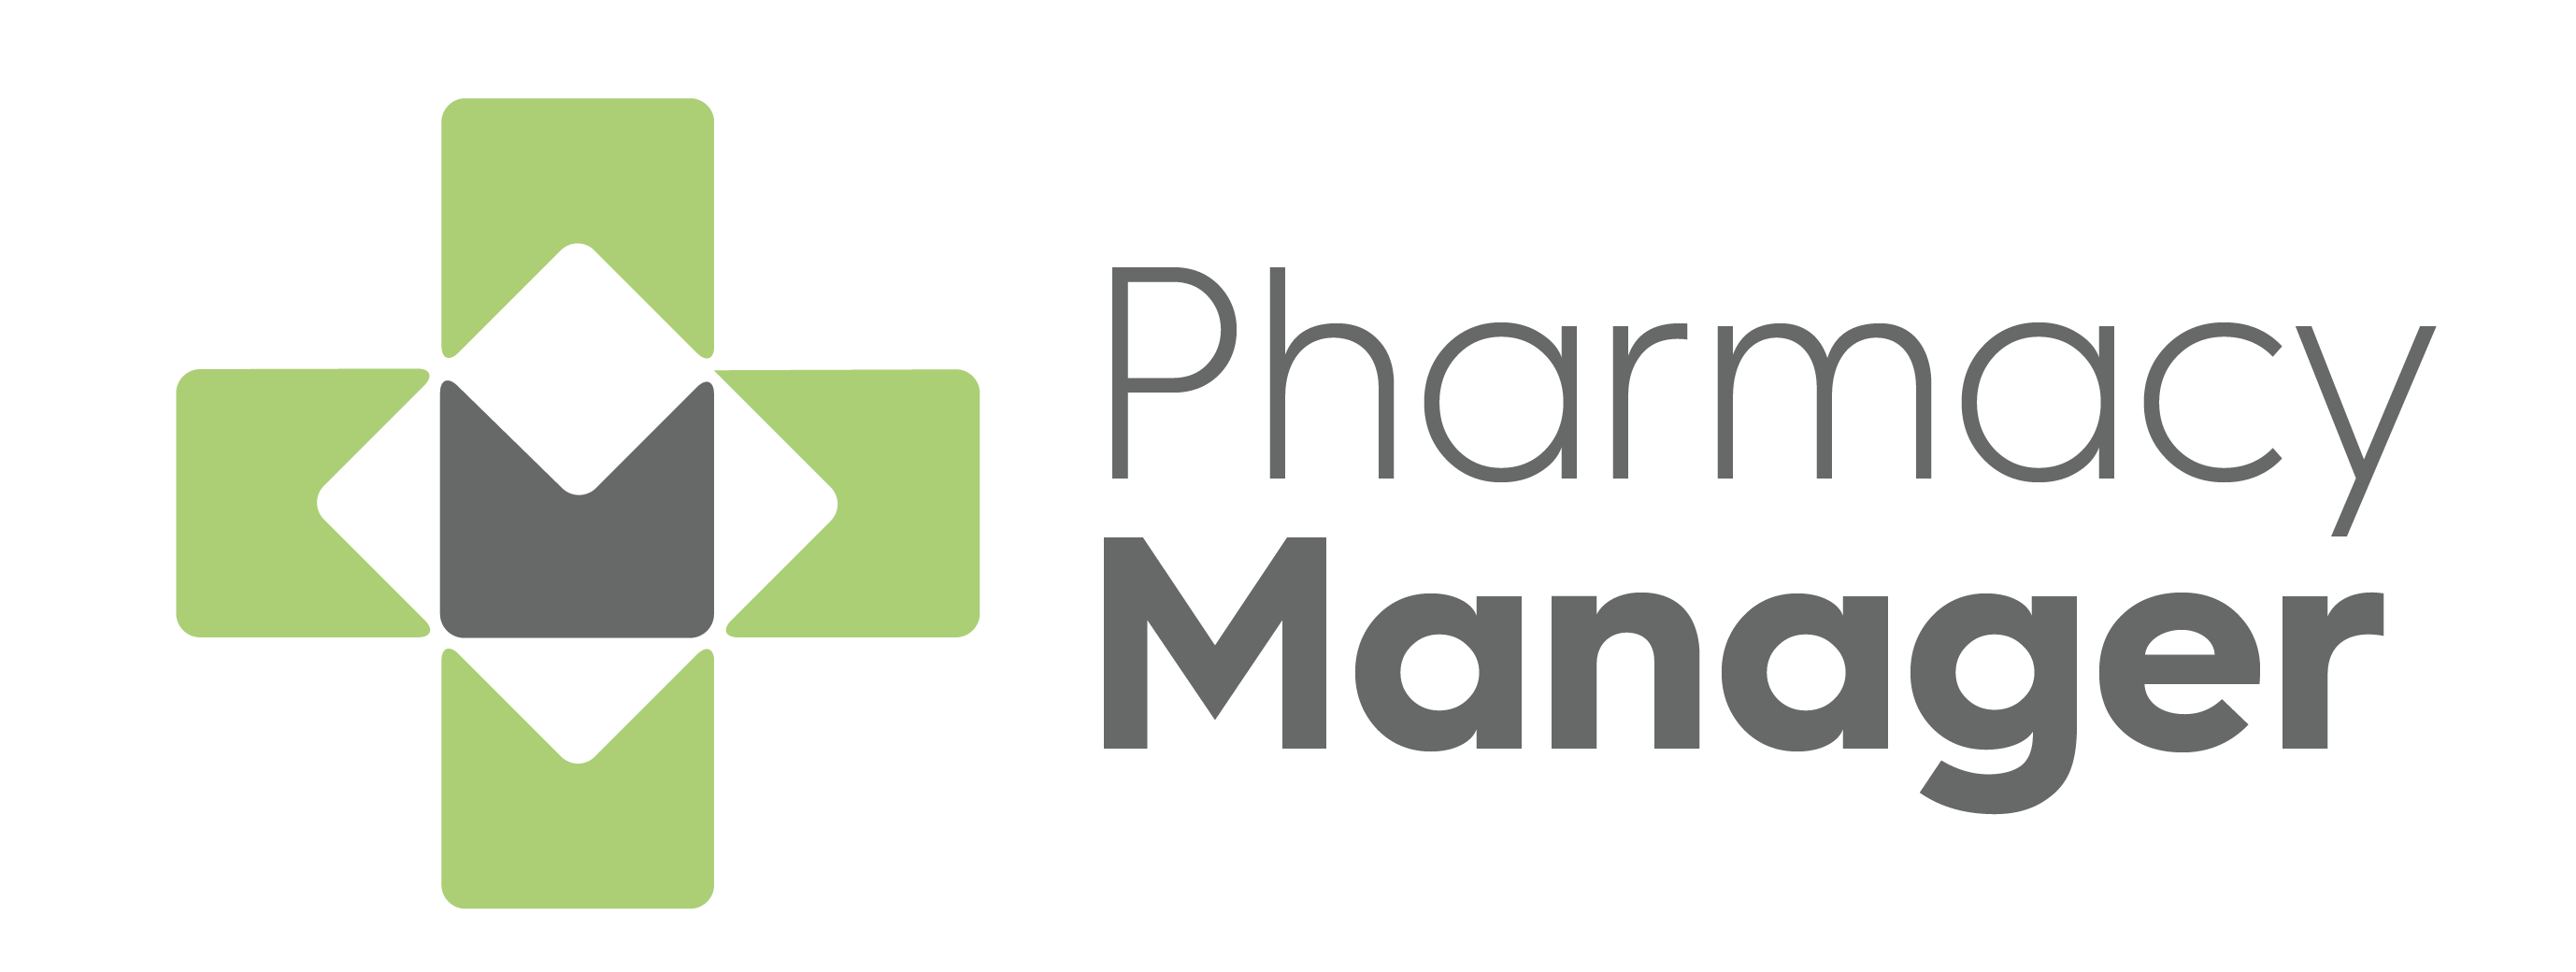 CHS_Pharmacy Manager logo-1